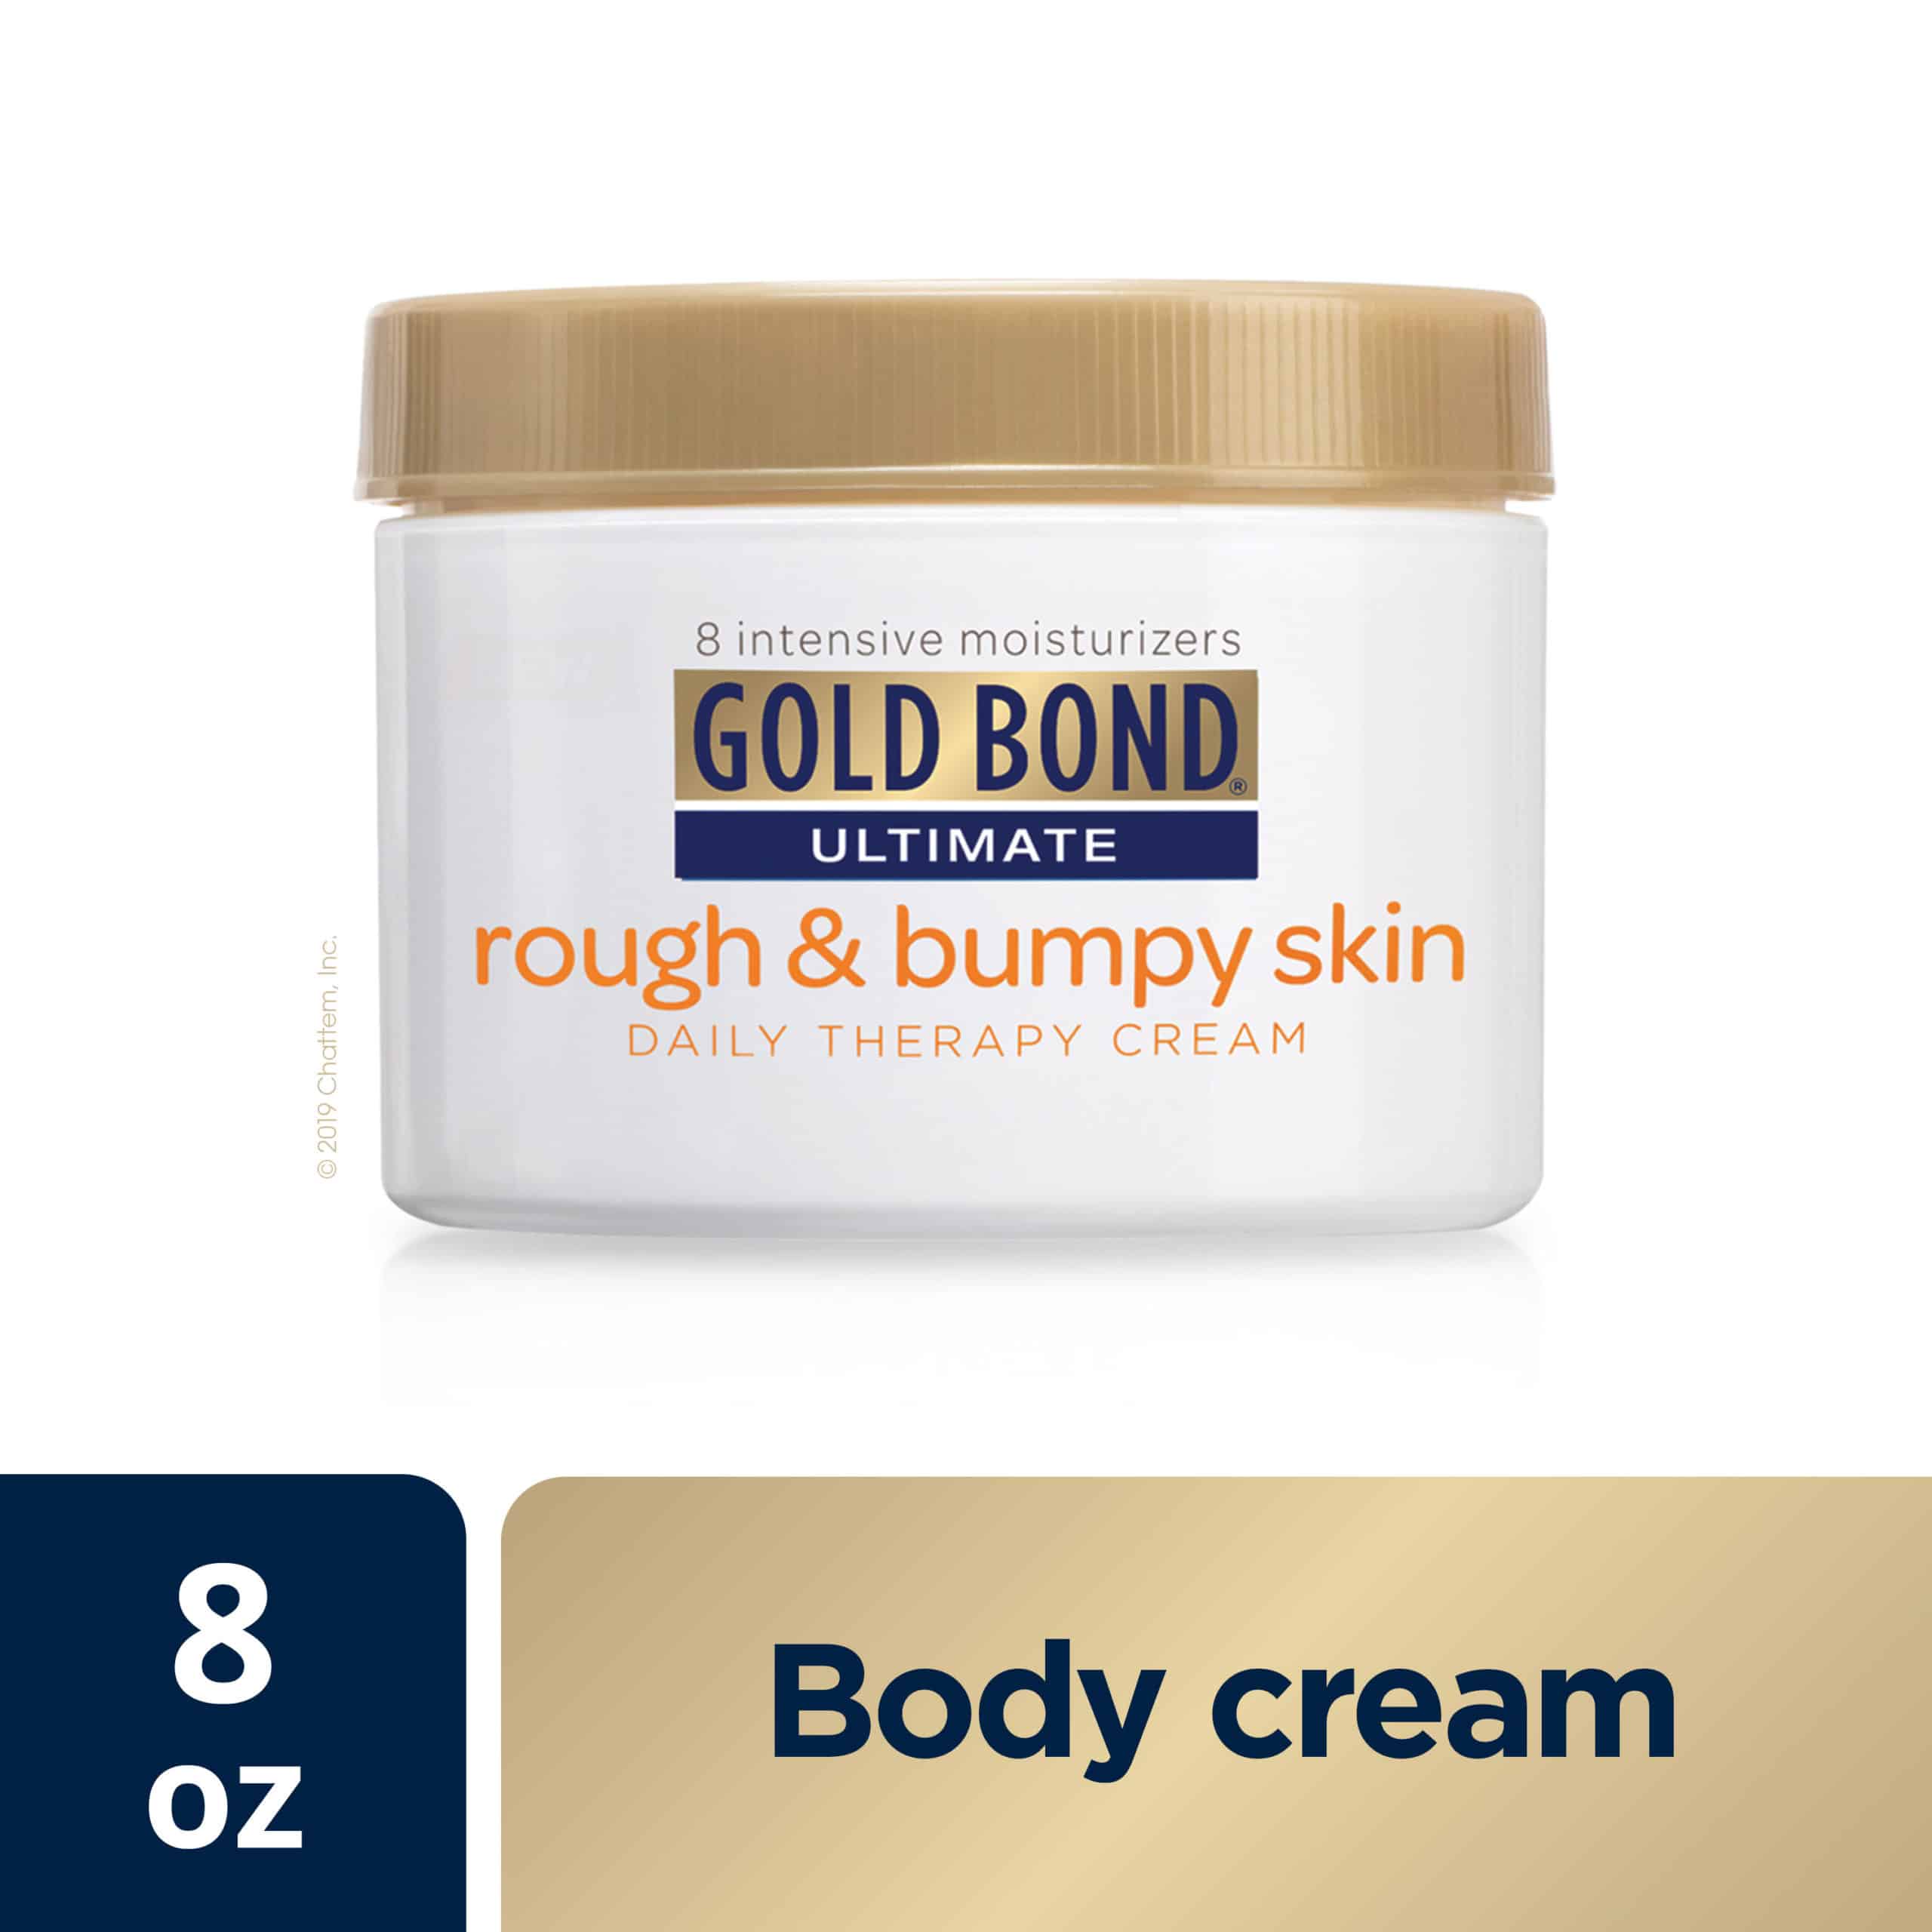 Gold Bond Ultimate Rough & Bumpy Skin Daily Therapy Cream - 8 oz